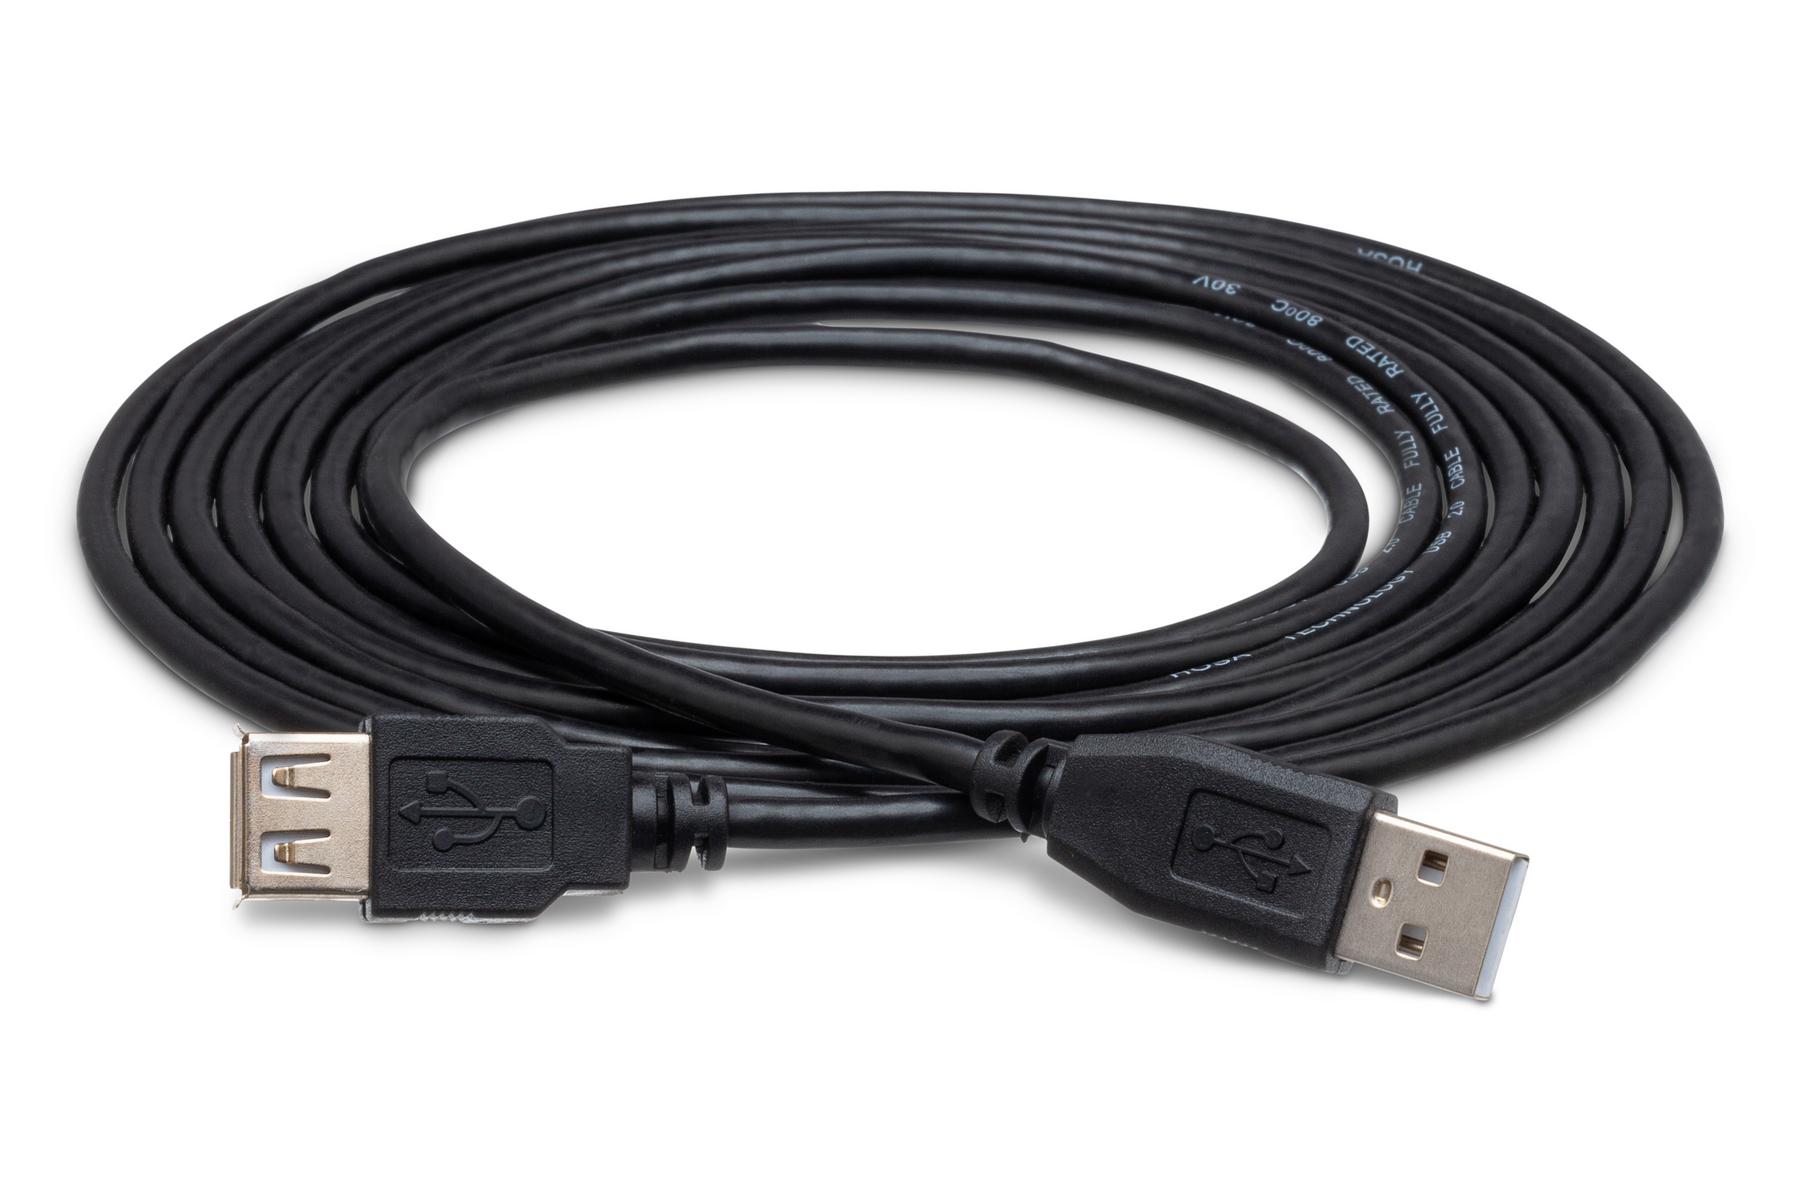 Extensor 1M cable USB macho a hembra. Wolf Electronics – WOLF